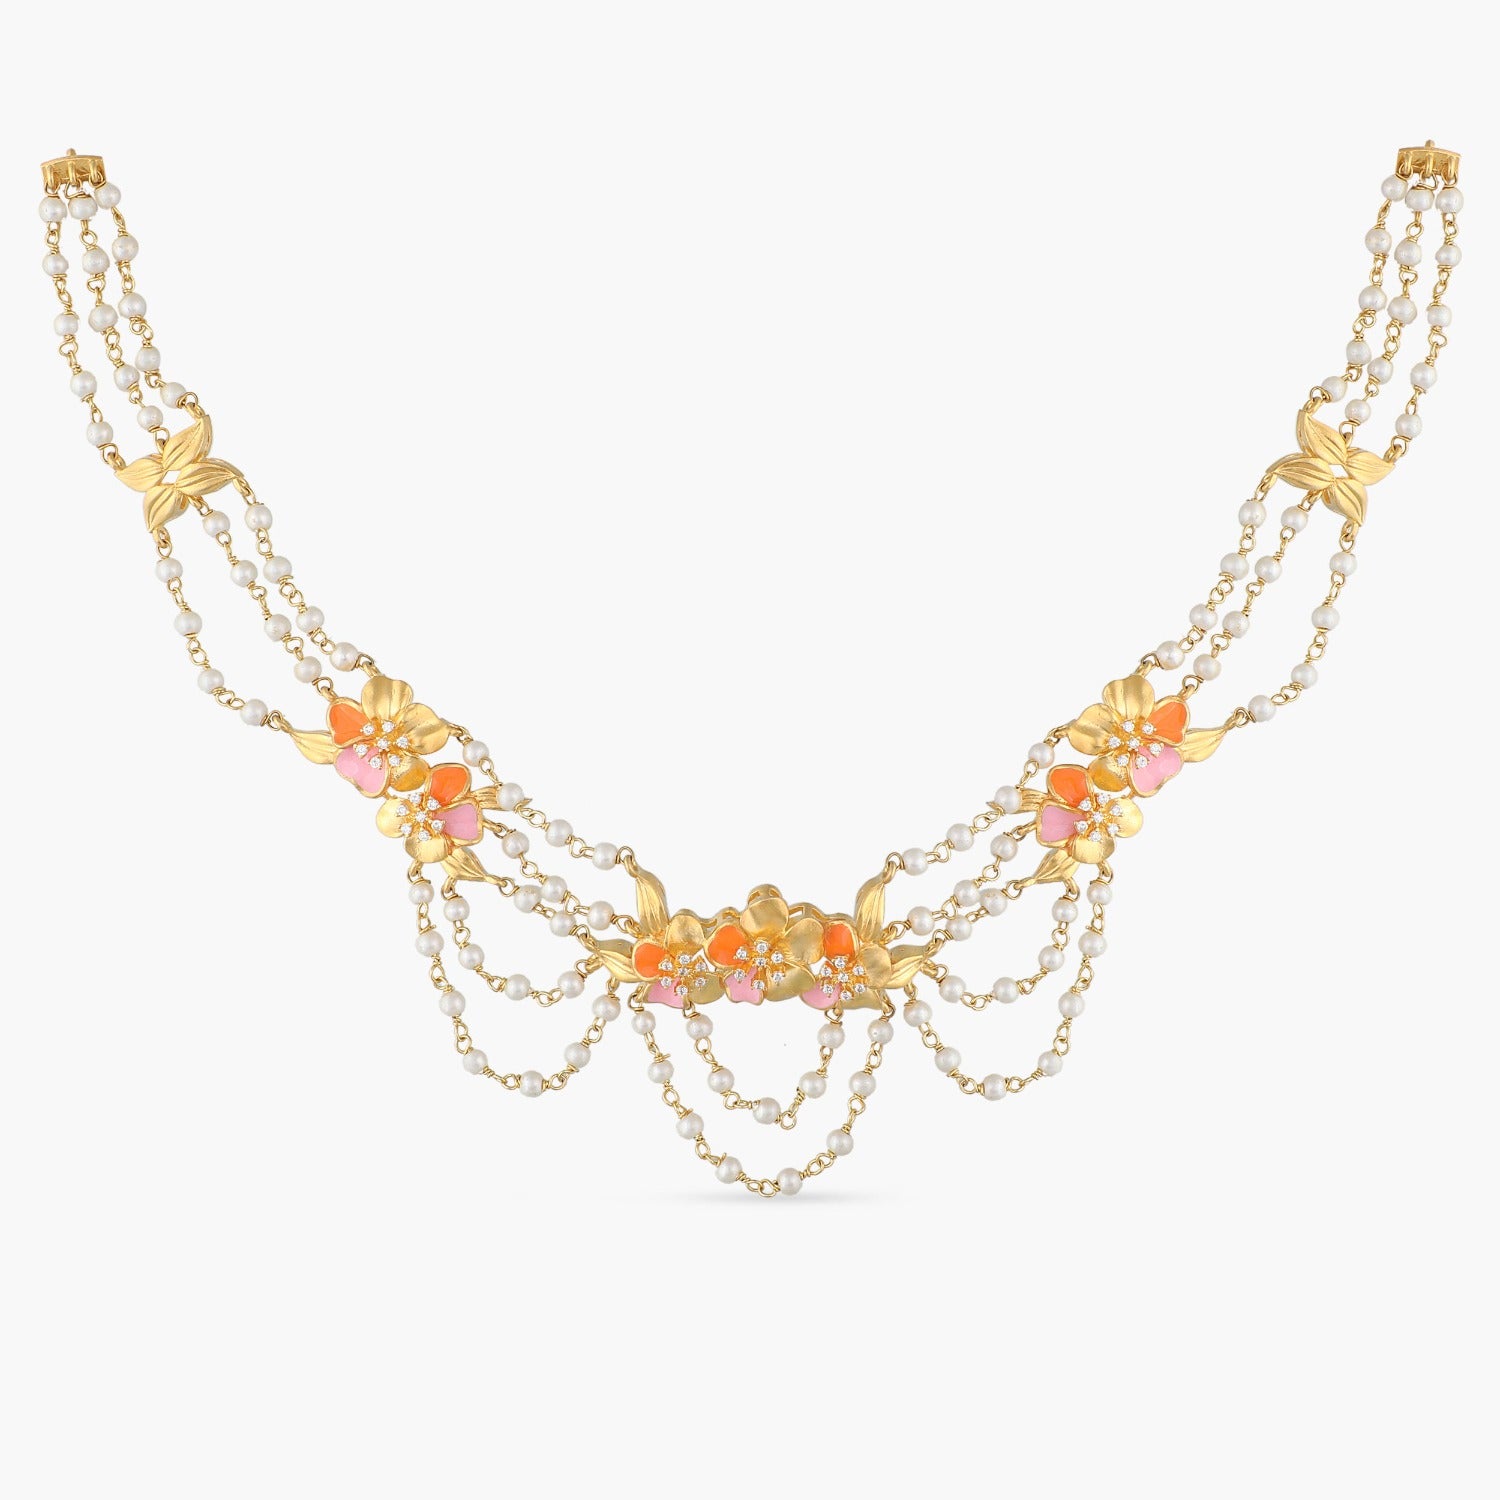 Latasia Gold Silver Copper Tri Tone Floral Flower Statement Necklace | eBay